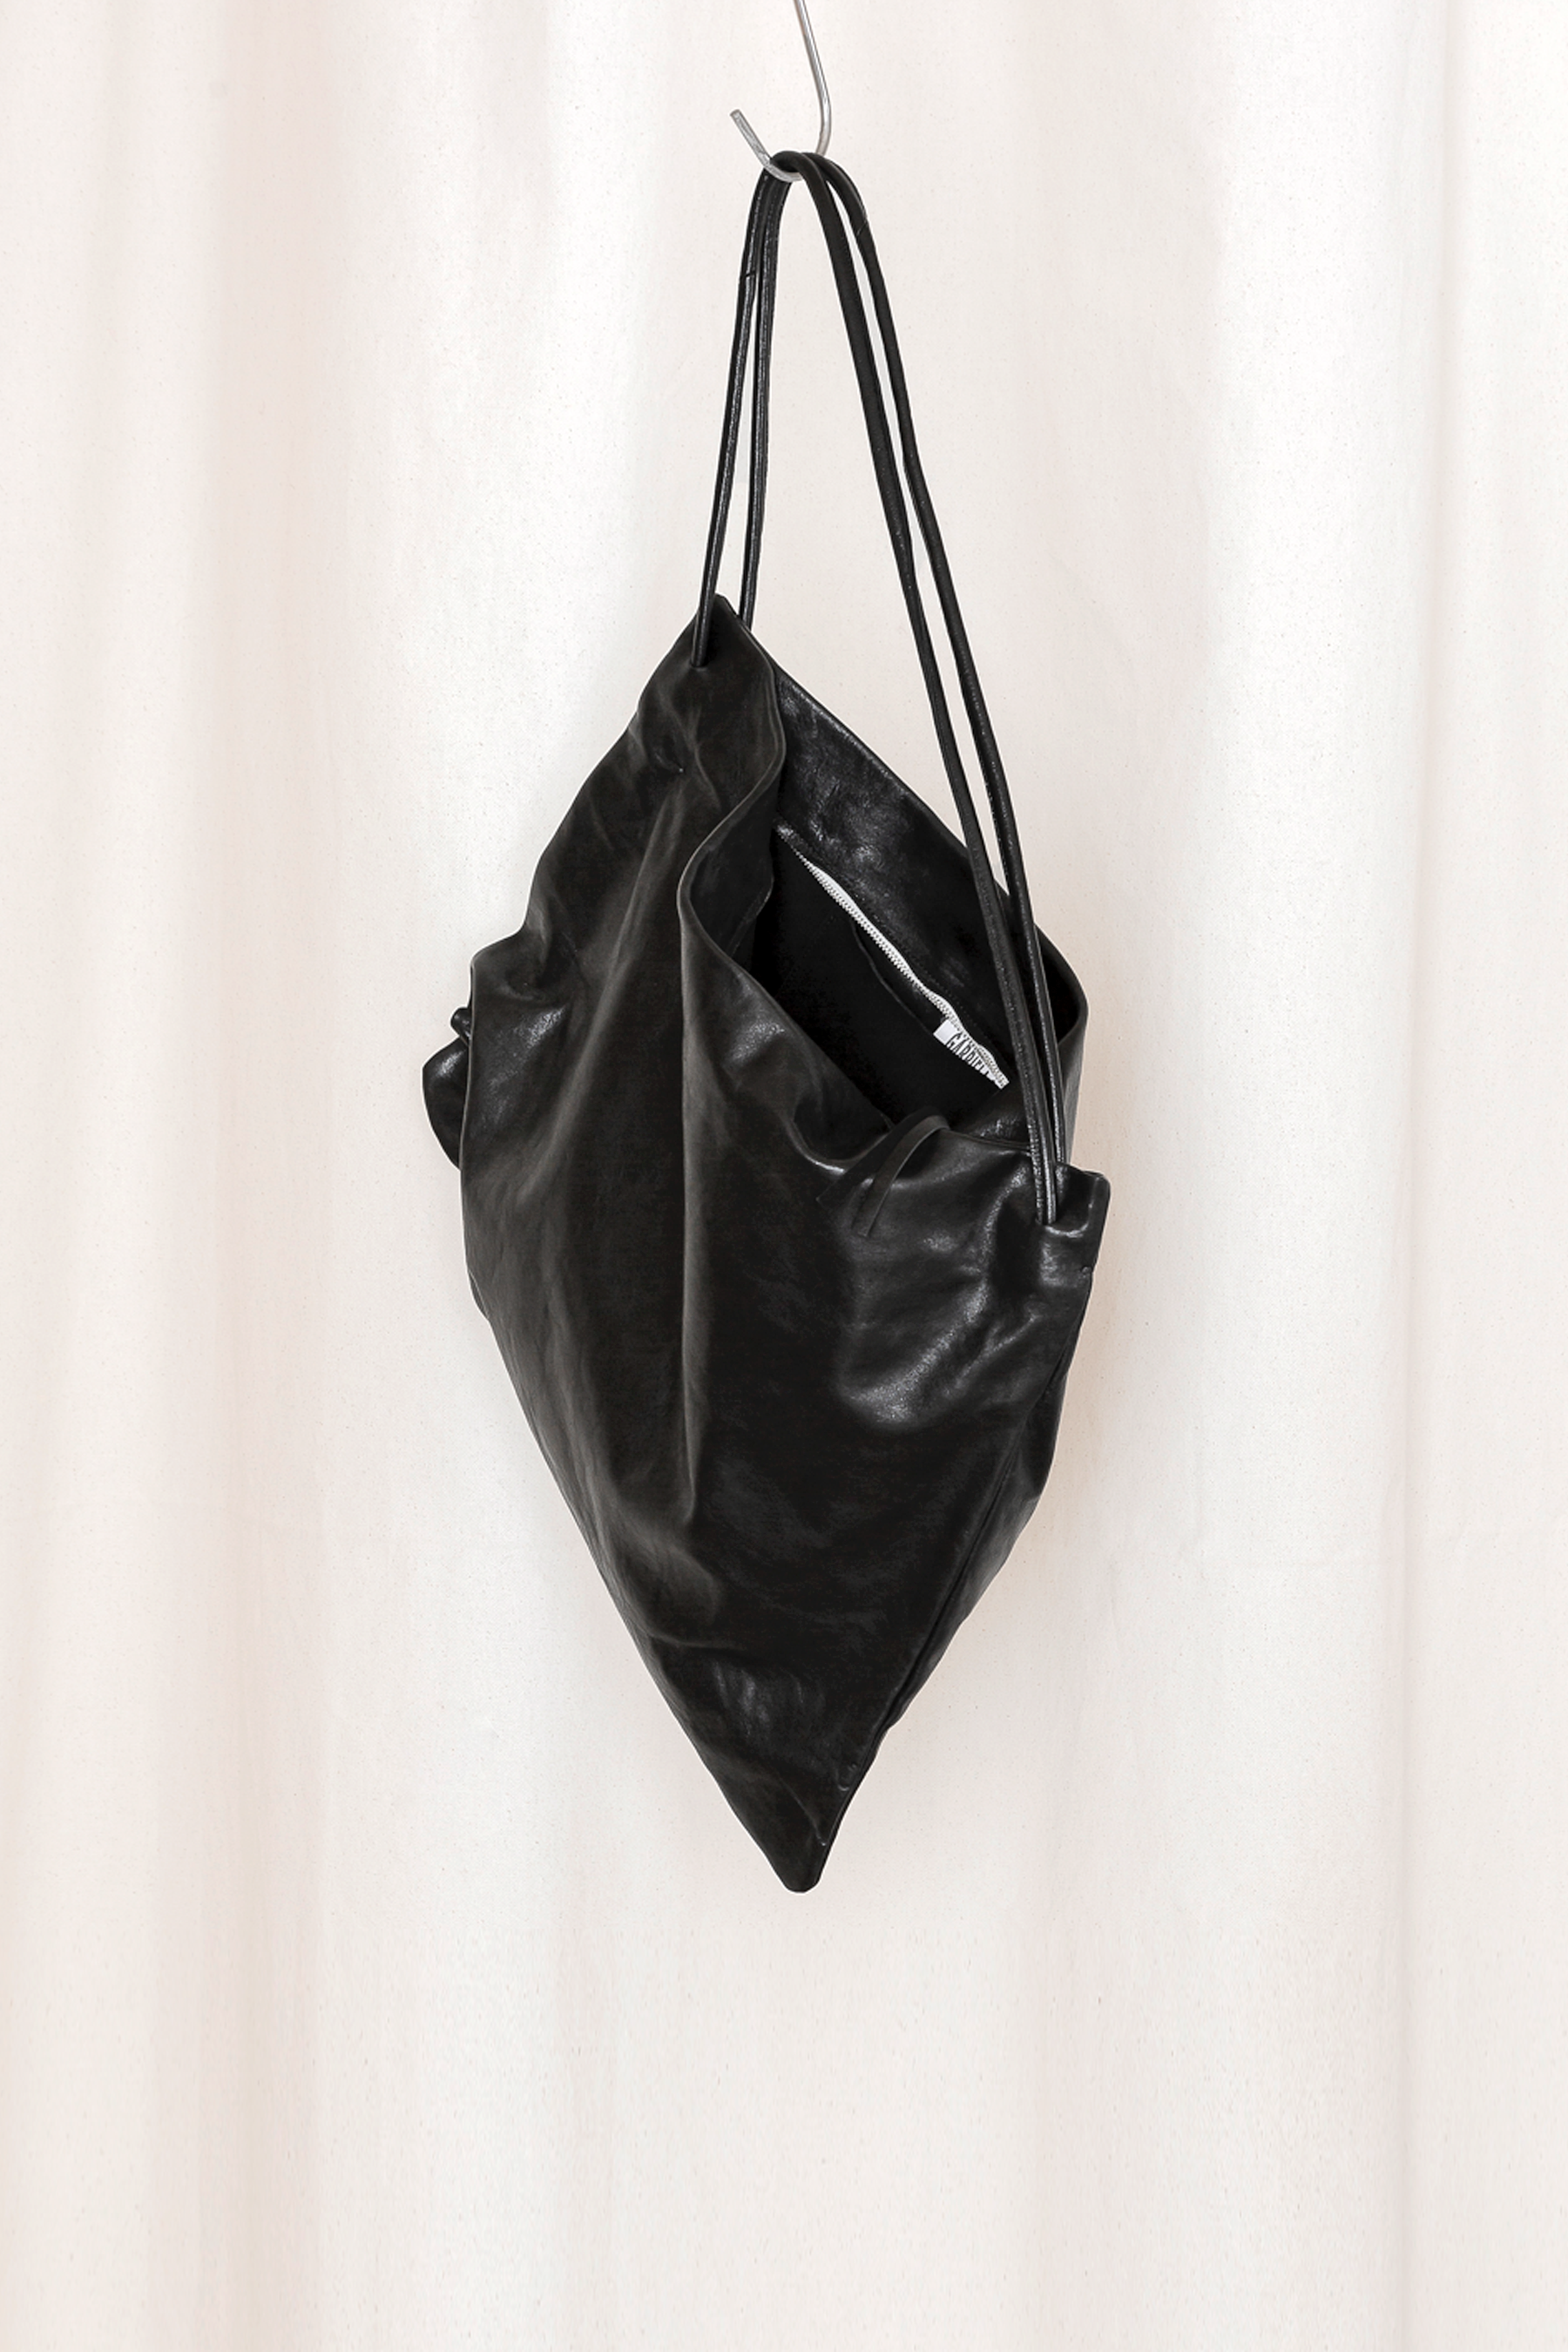 No.131 Black Leather Gathered Crossed Bag